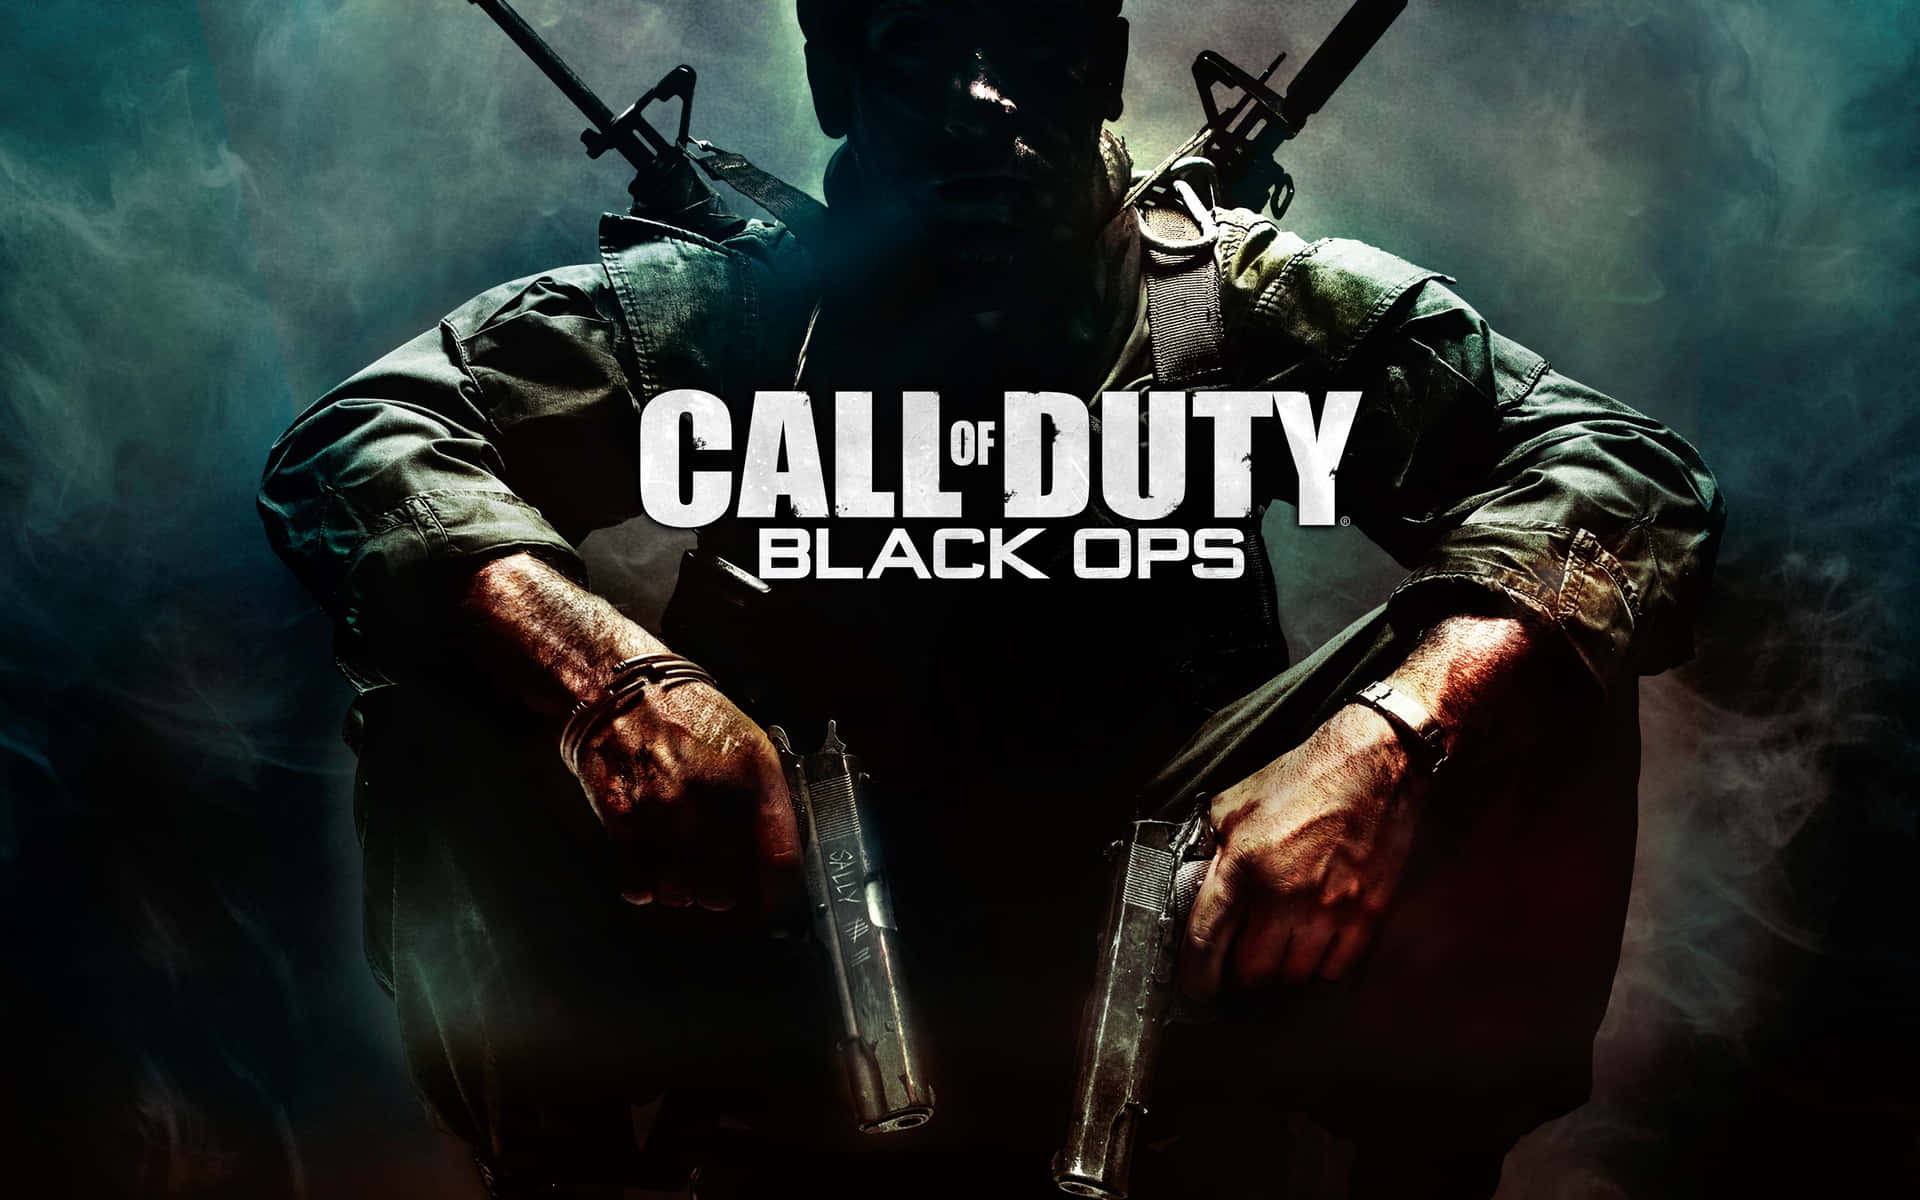 !Nyd oplevelsen af ​​Call of Duty i fuld HD! Wallpaper